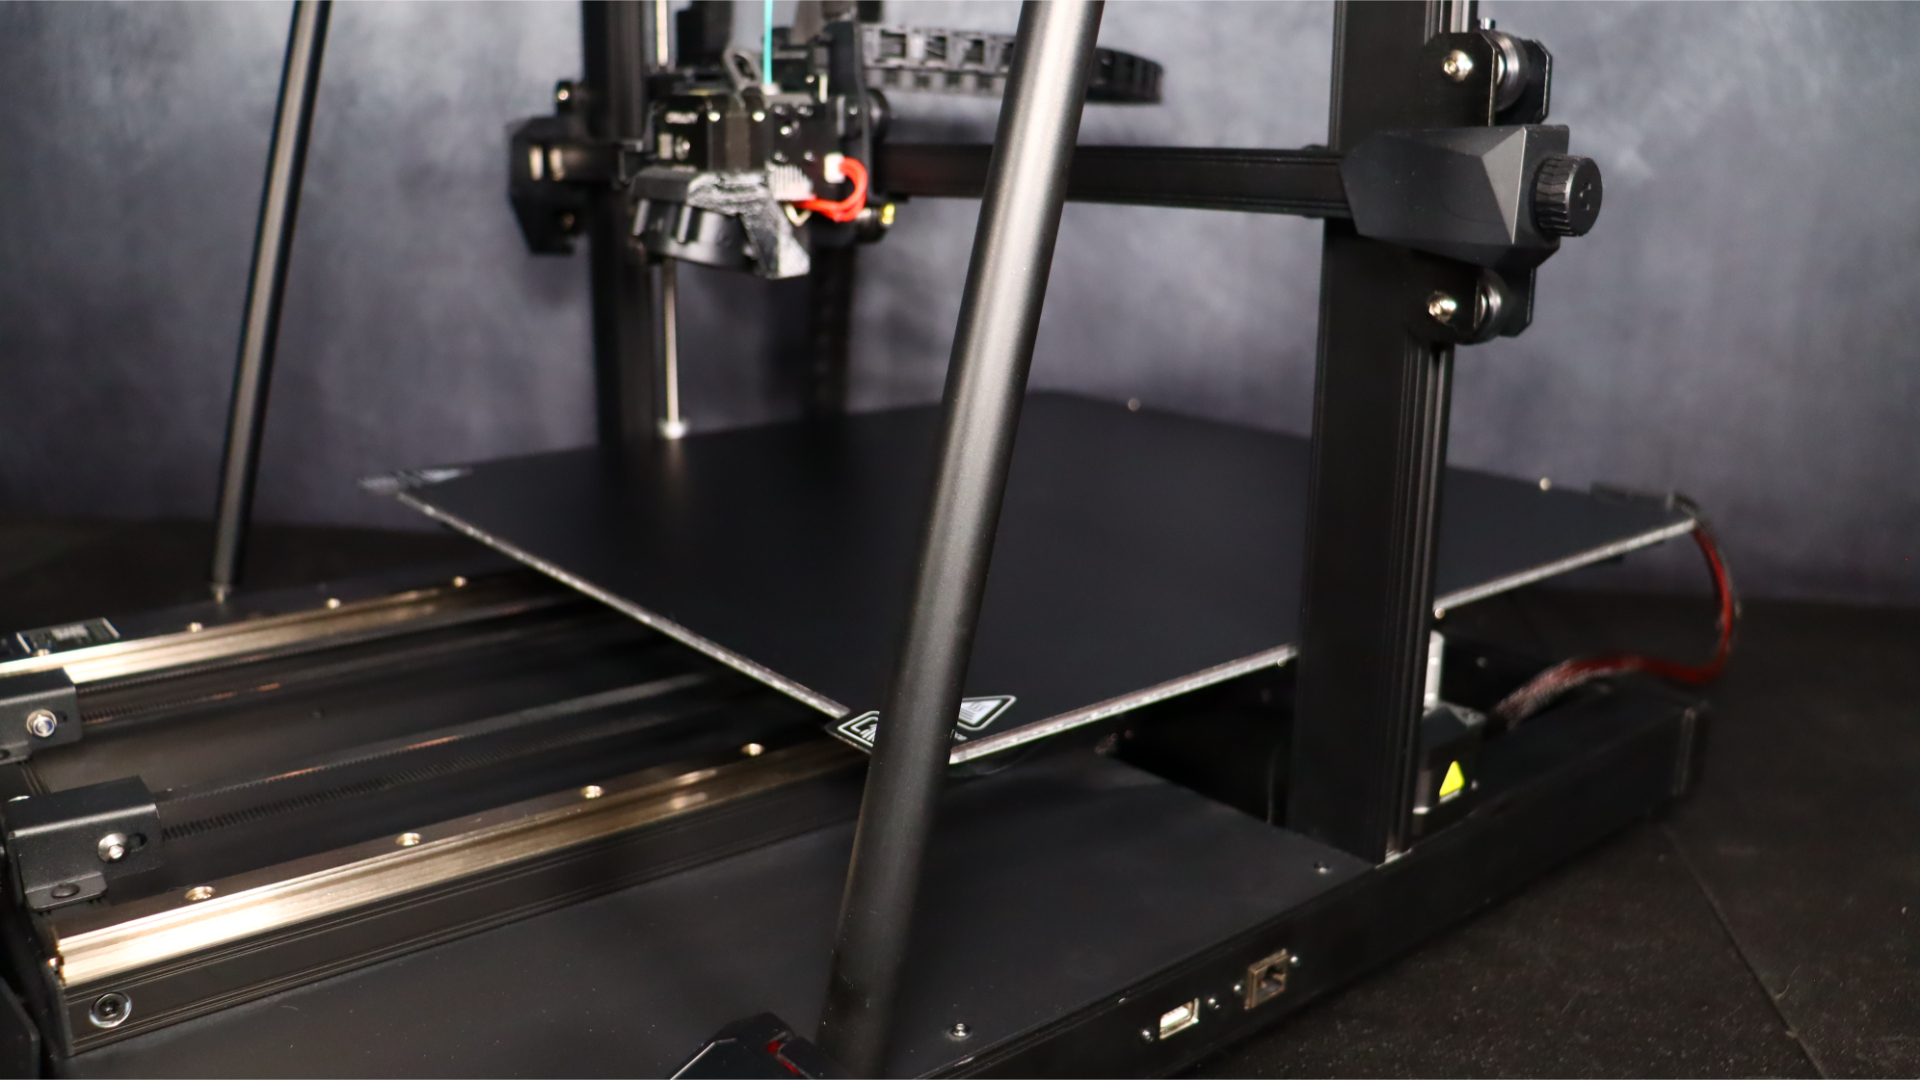 The Creality CR-M4 3D printer framework.